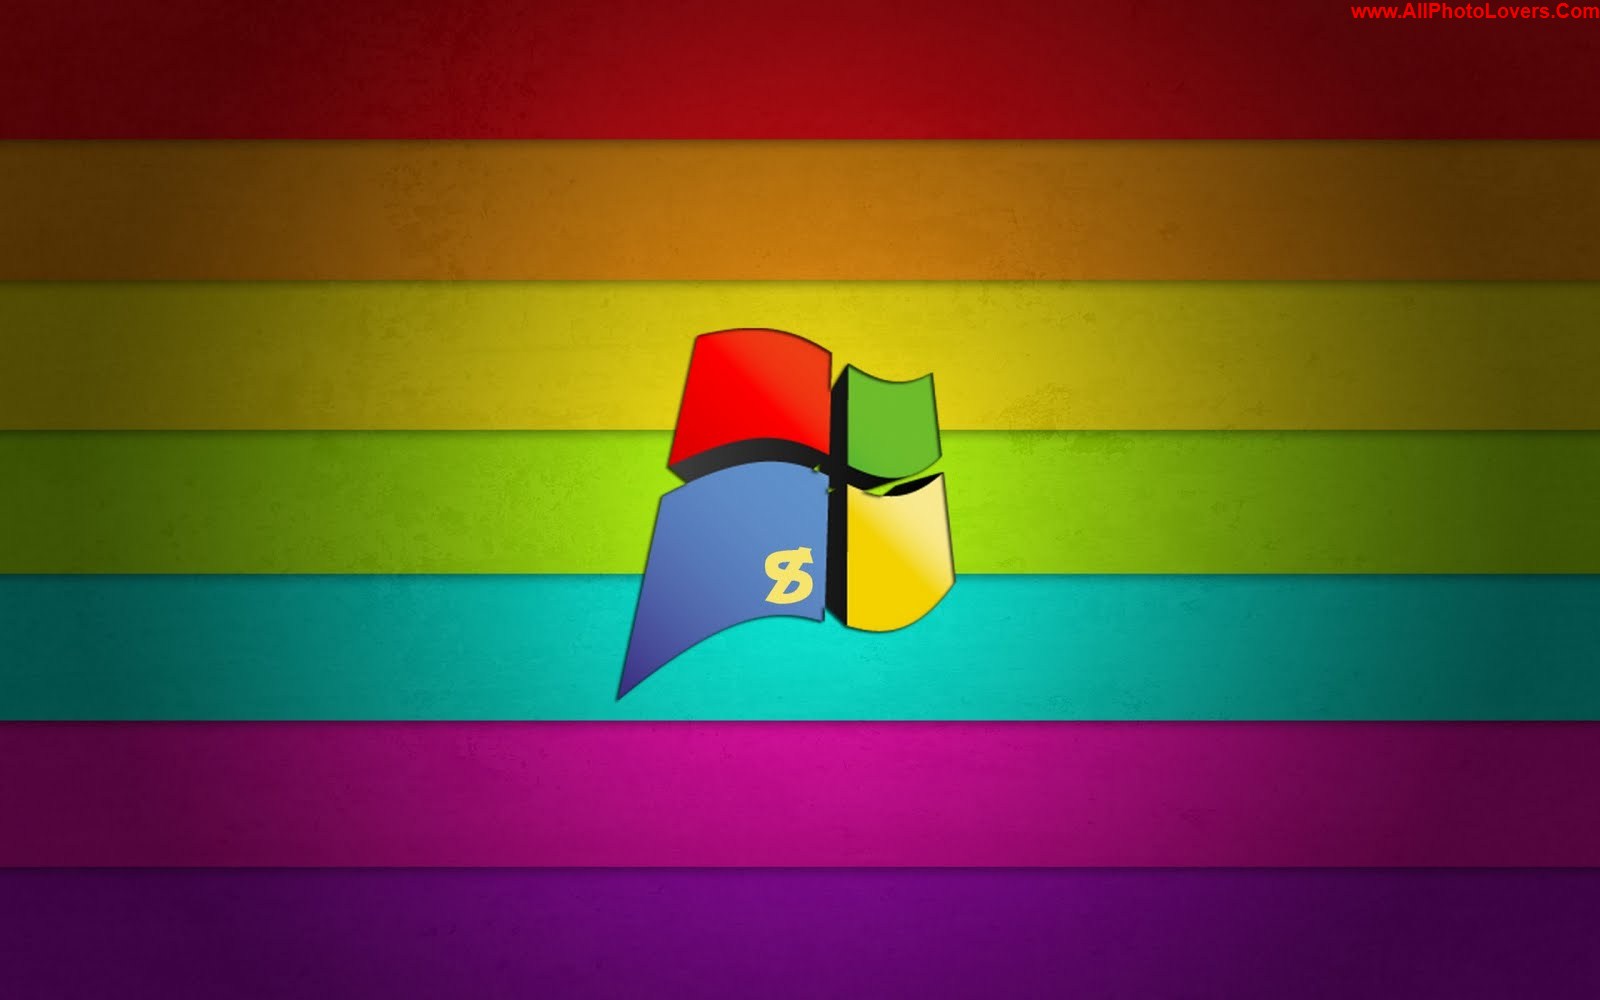 Full Color Windows 8 Wallpaper